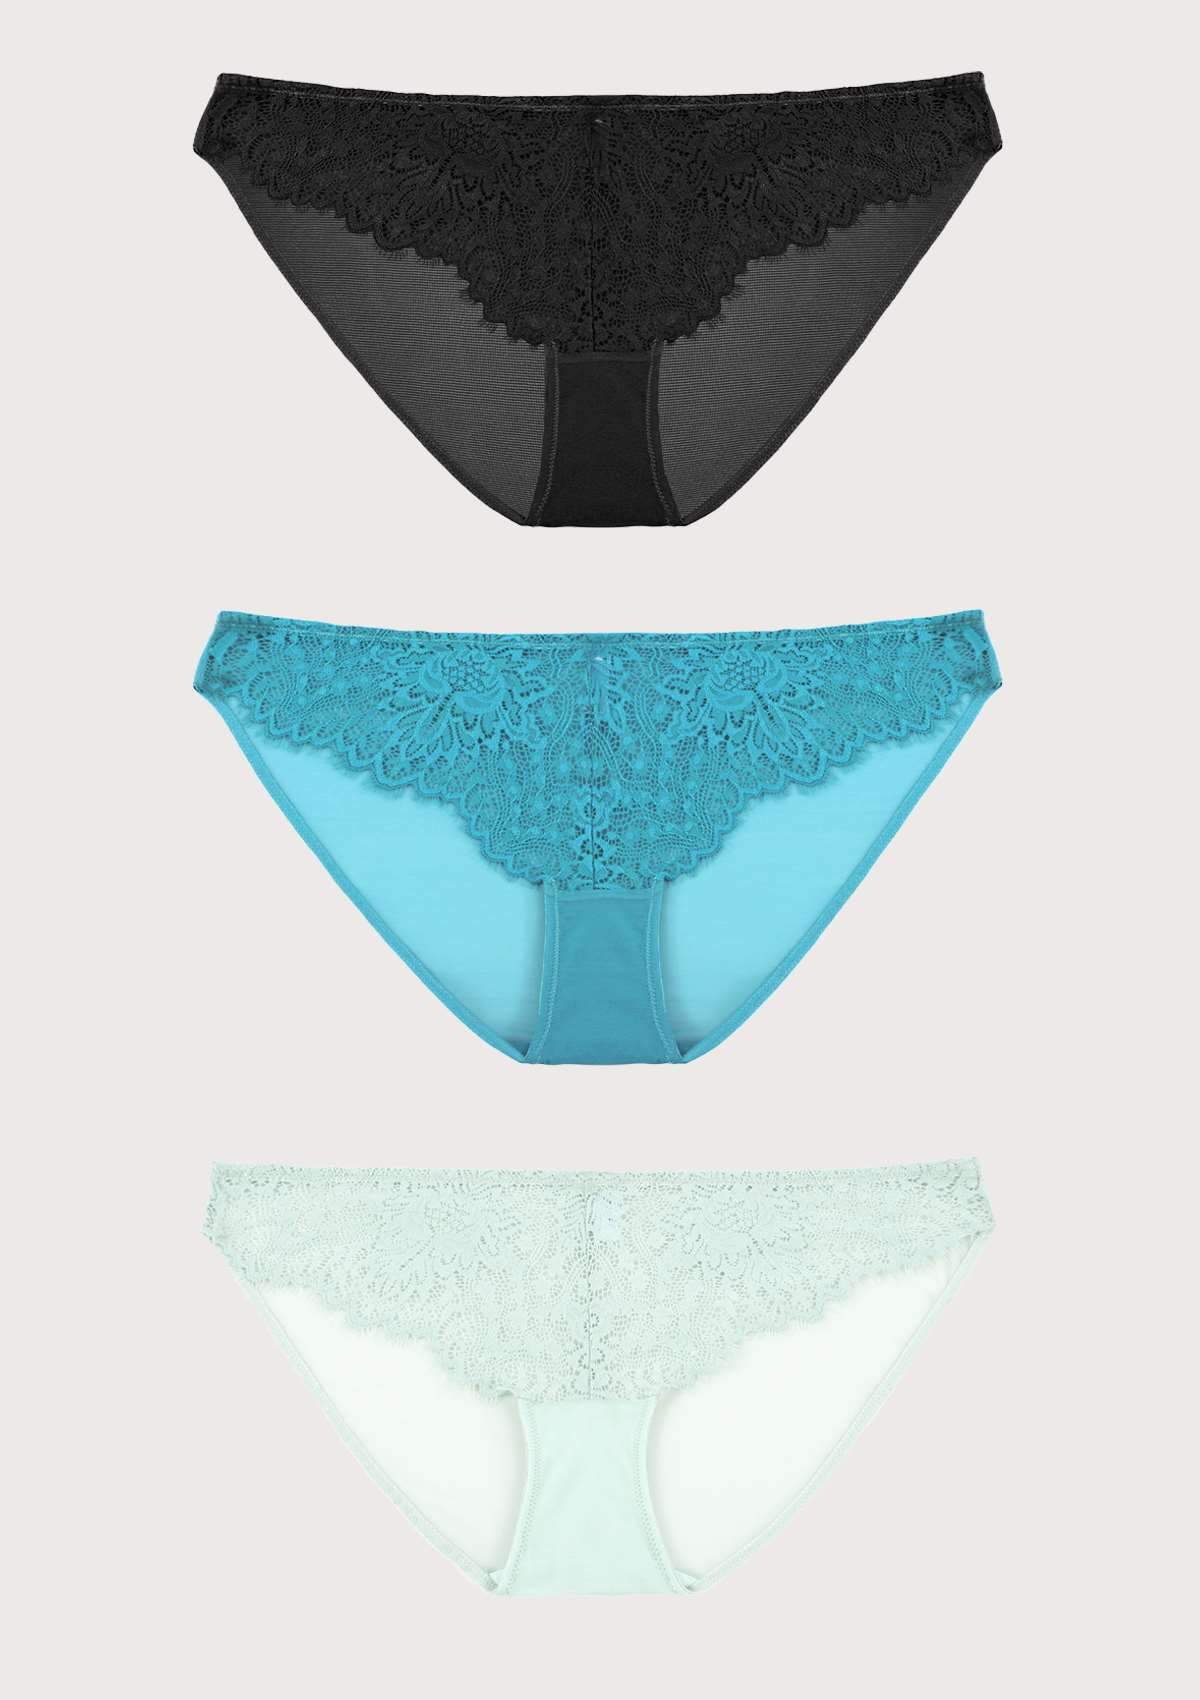 HSIA Sunflower Exquisite Lighweight Soft Lace Bikini Panties 3 Pack - M / Black+Horizon Blue+Crystal Blue